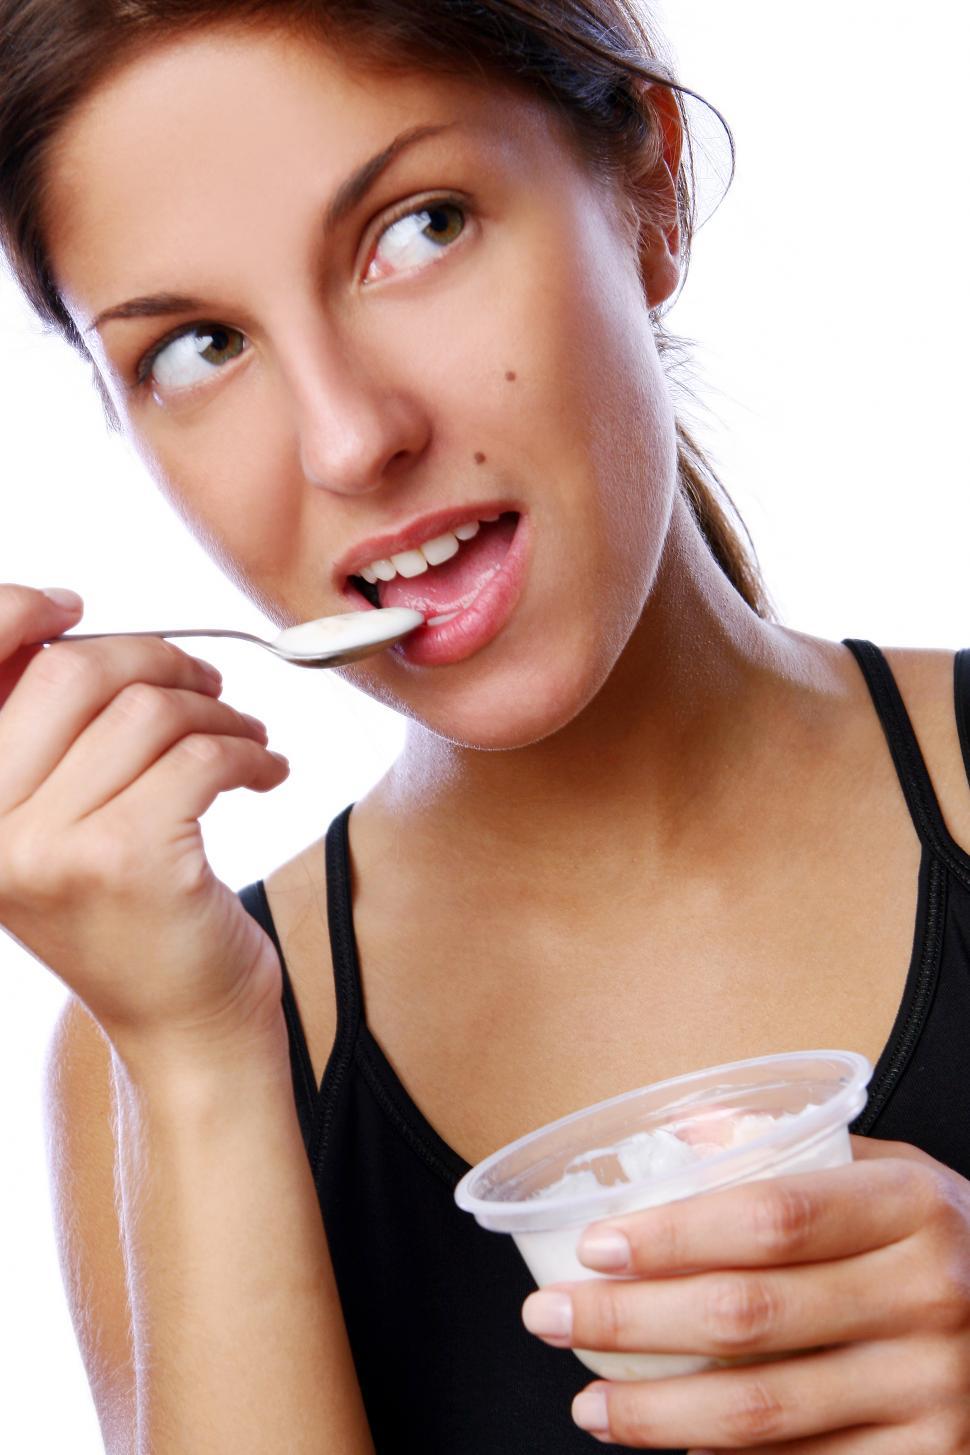 Free Image of young woman eating yogurt 